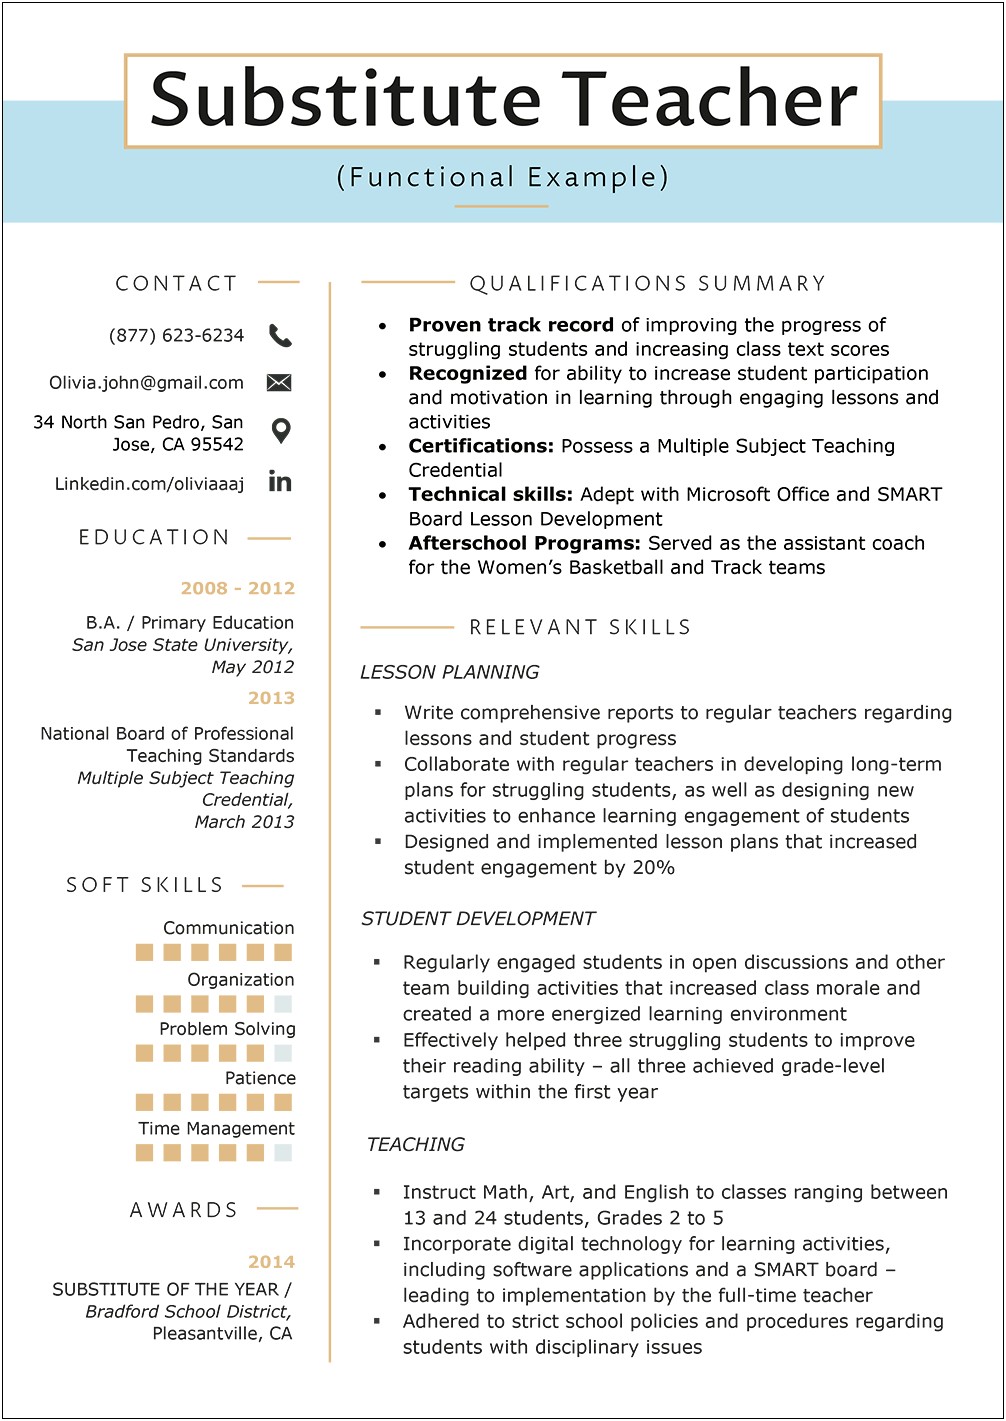 Core Competencies Vs Relevant Skills On Resume